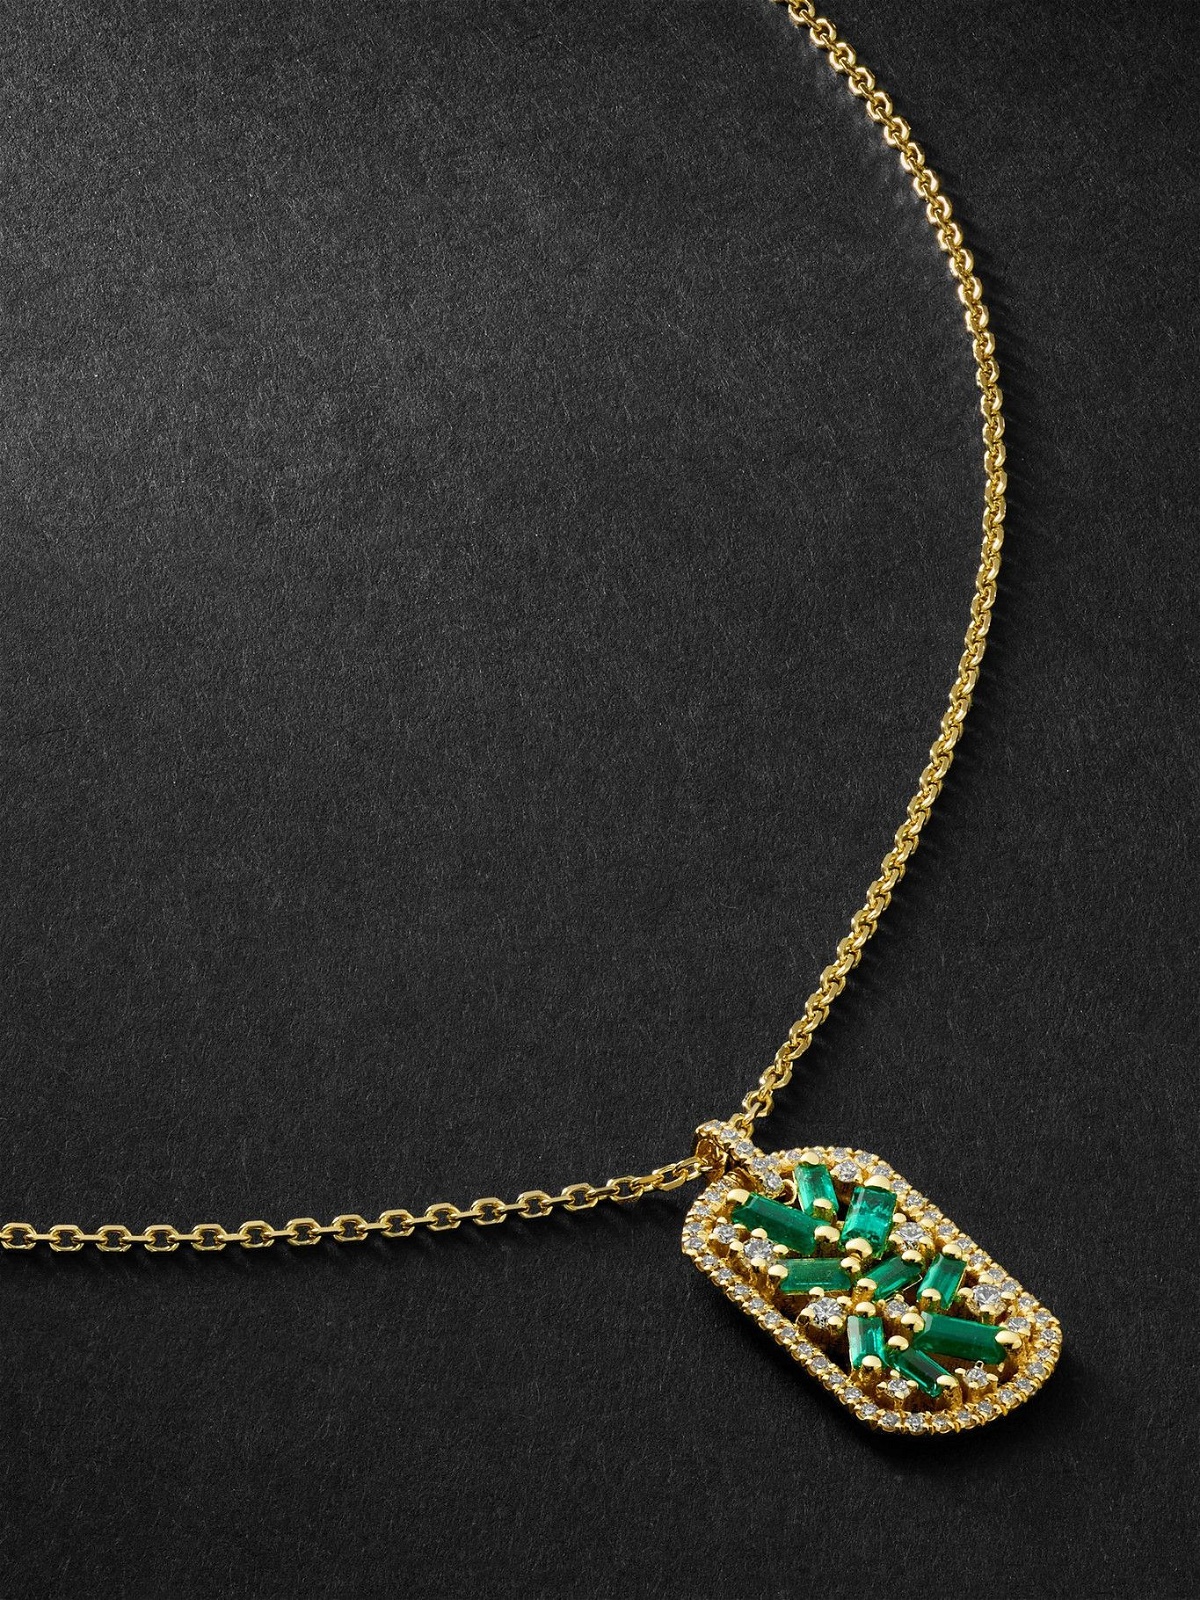 Suzanne Kalan - Gold, Emerald and Diamond Pendant Necklace Suzanne Kalan